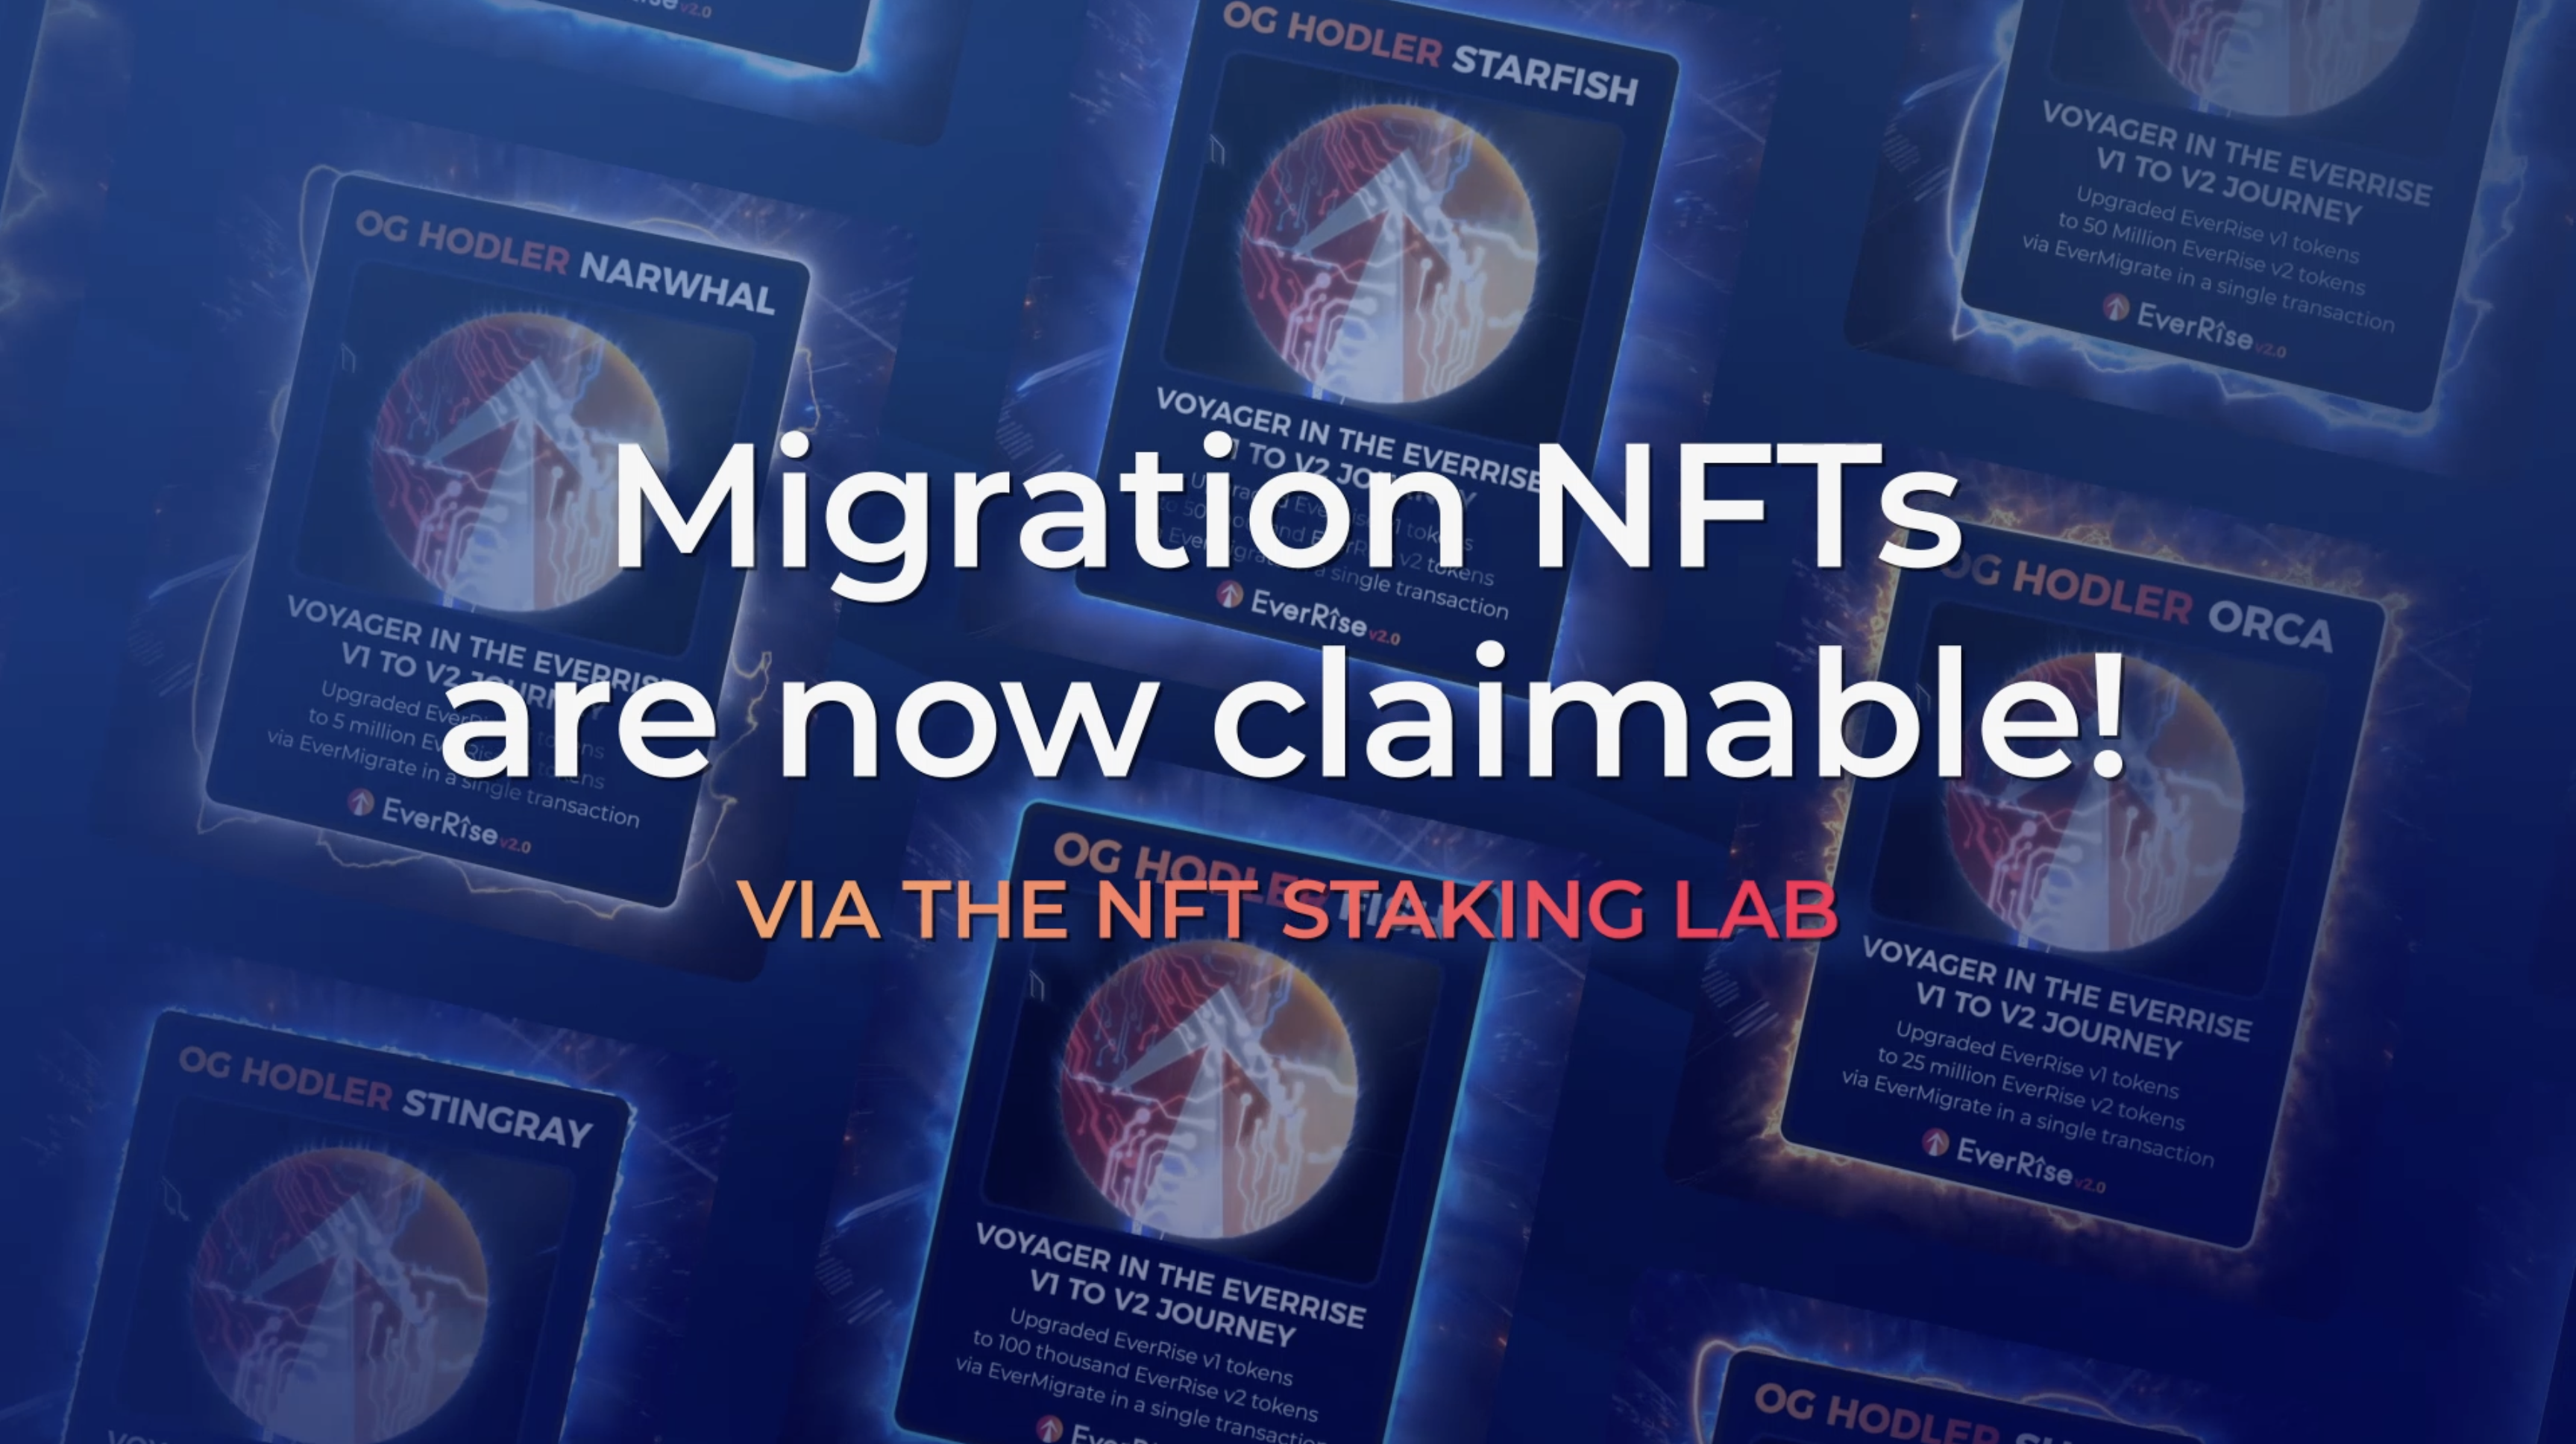 Introducing Migration NFTs